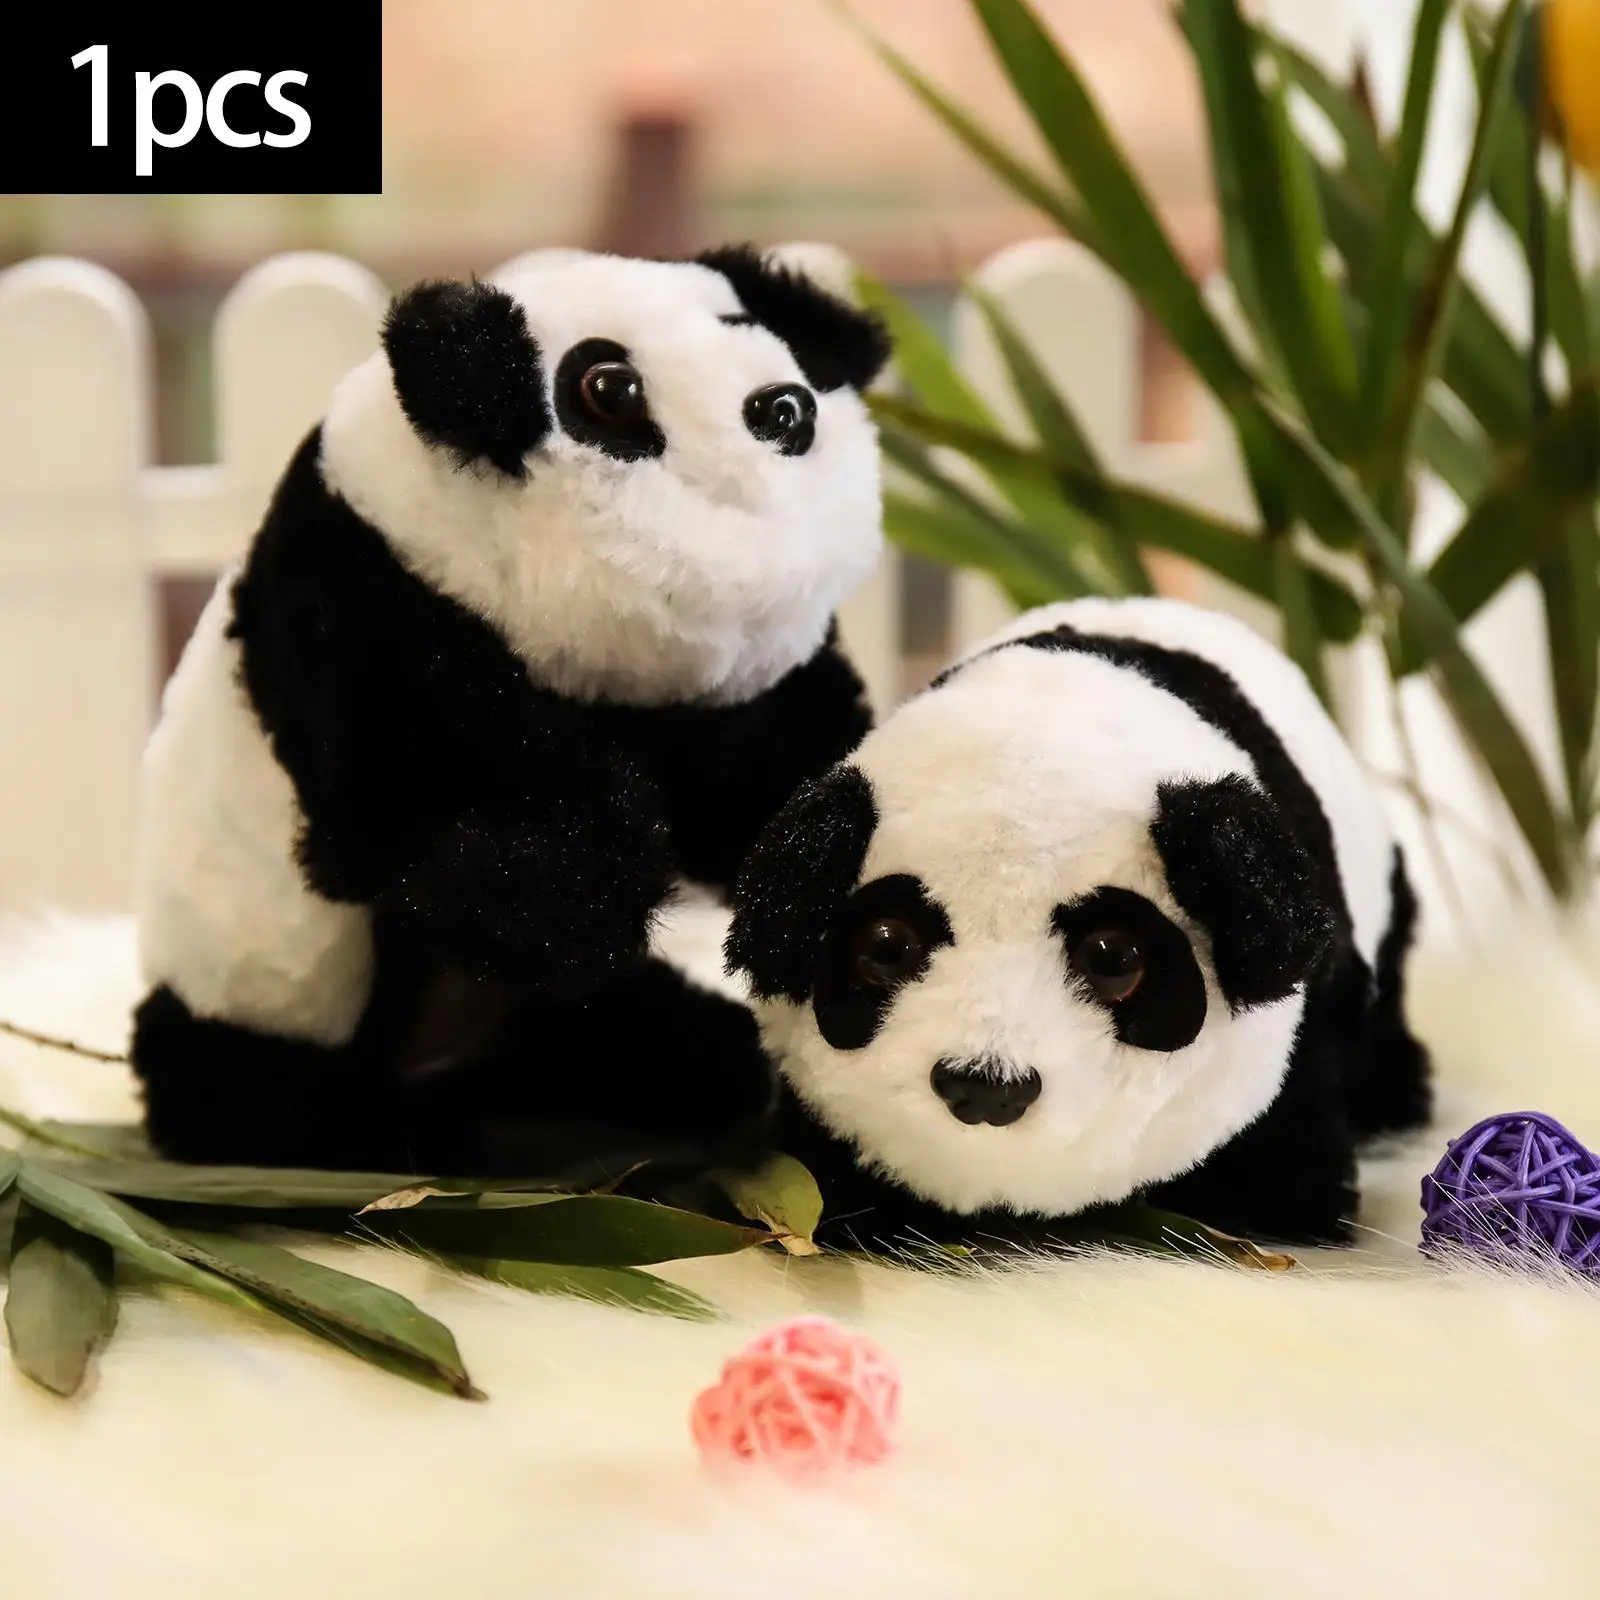 Walking Panda Toy Plush Interactive Play Cute Stuffed Animal musical Gift Appease Toy